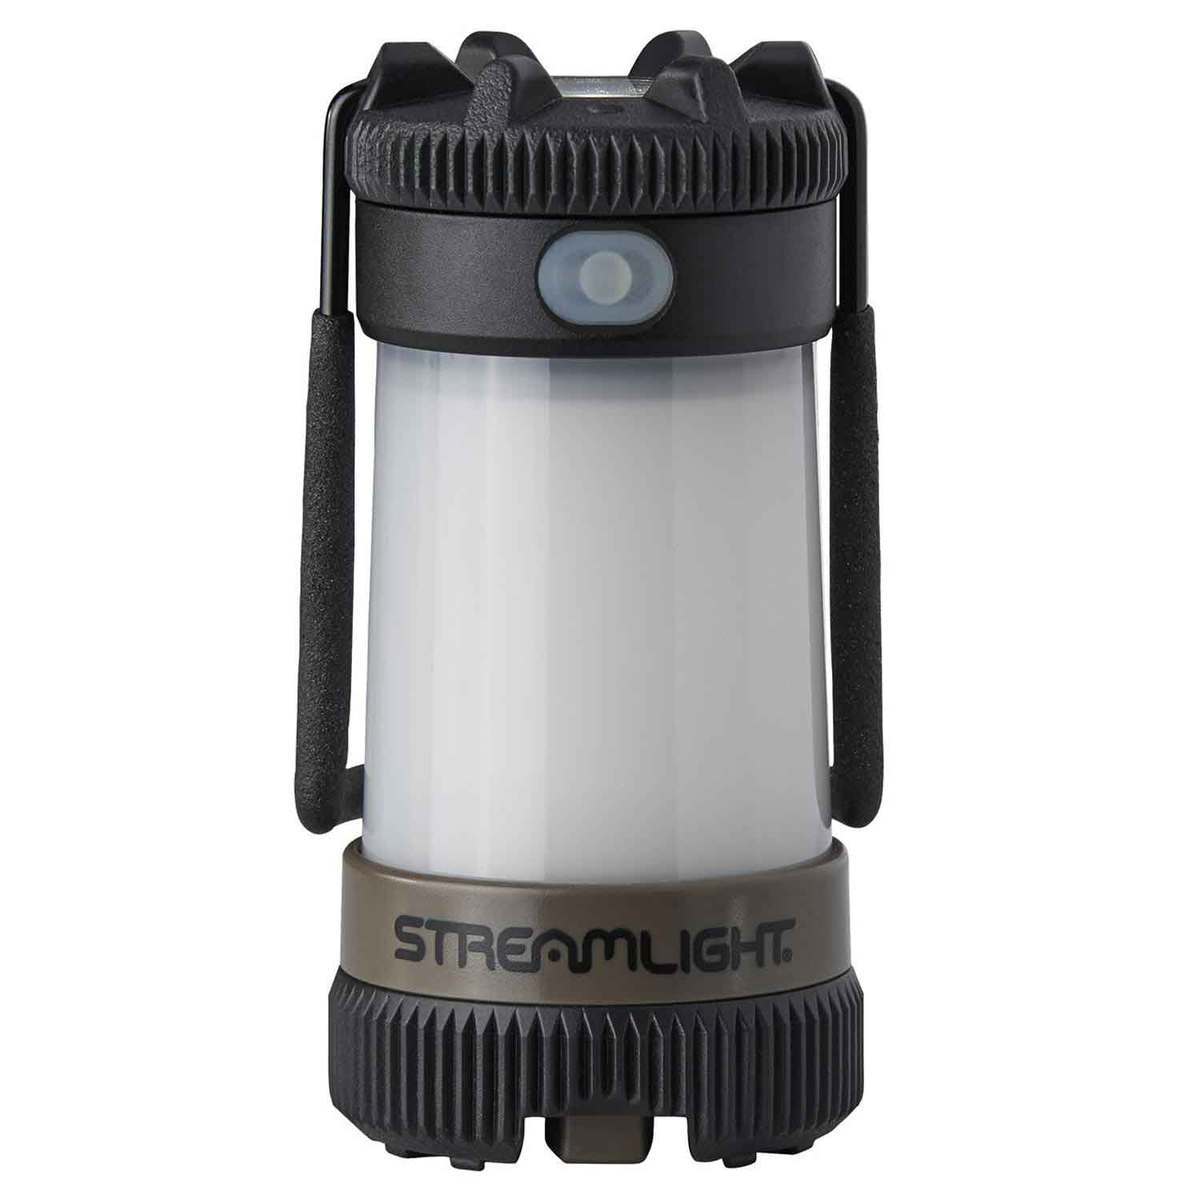 Cascade Mountain Tech Pop-Up Lantern & Flashlight, Light Output 300 Lumens, Battery Size AA (Included) Dark Grey, Size: Medium Size Lantern 